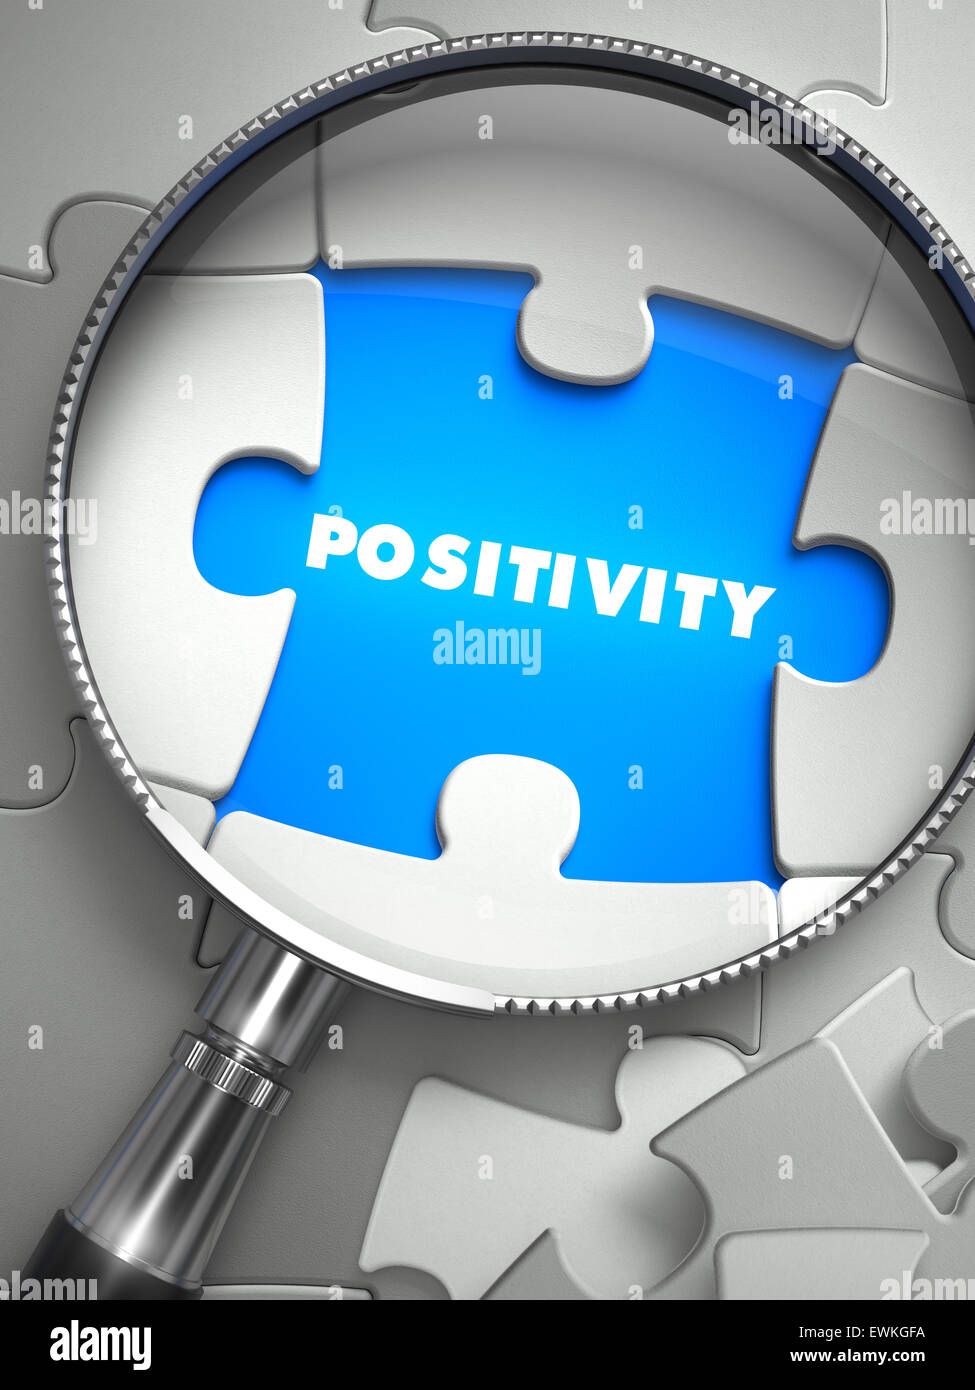 Positivity - Missing Puzzle Piece through Magnifier. Stock Photo